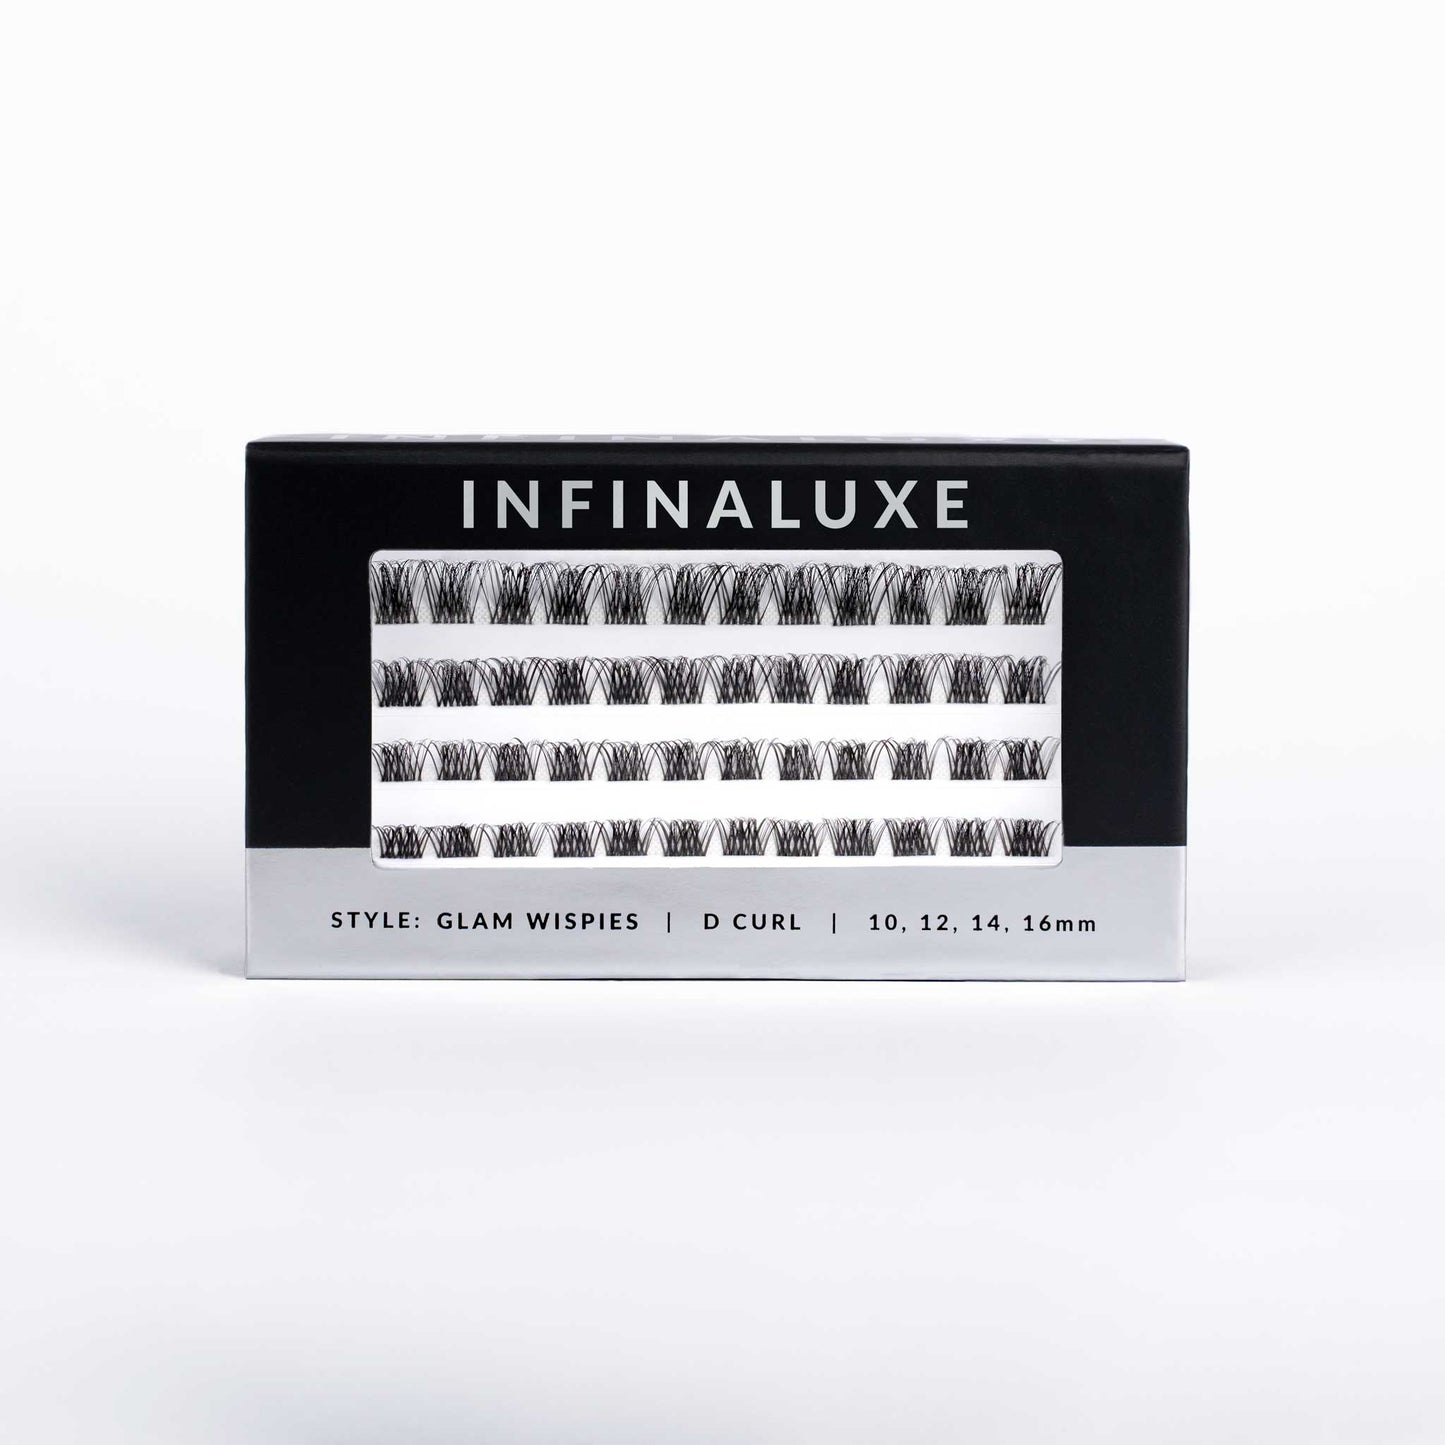 Infinaluxe - Complete Kit + Lash Cleanser